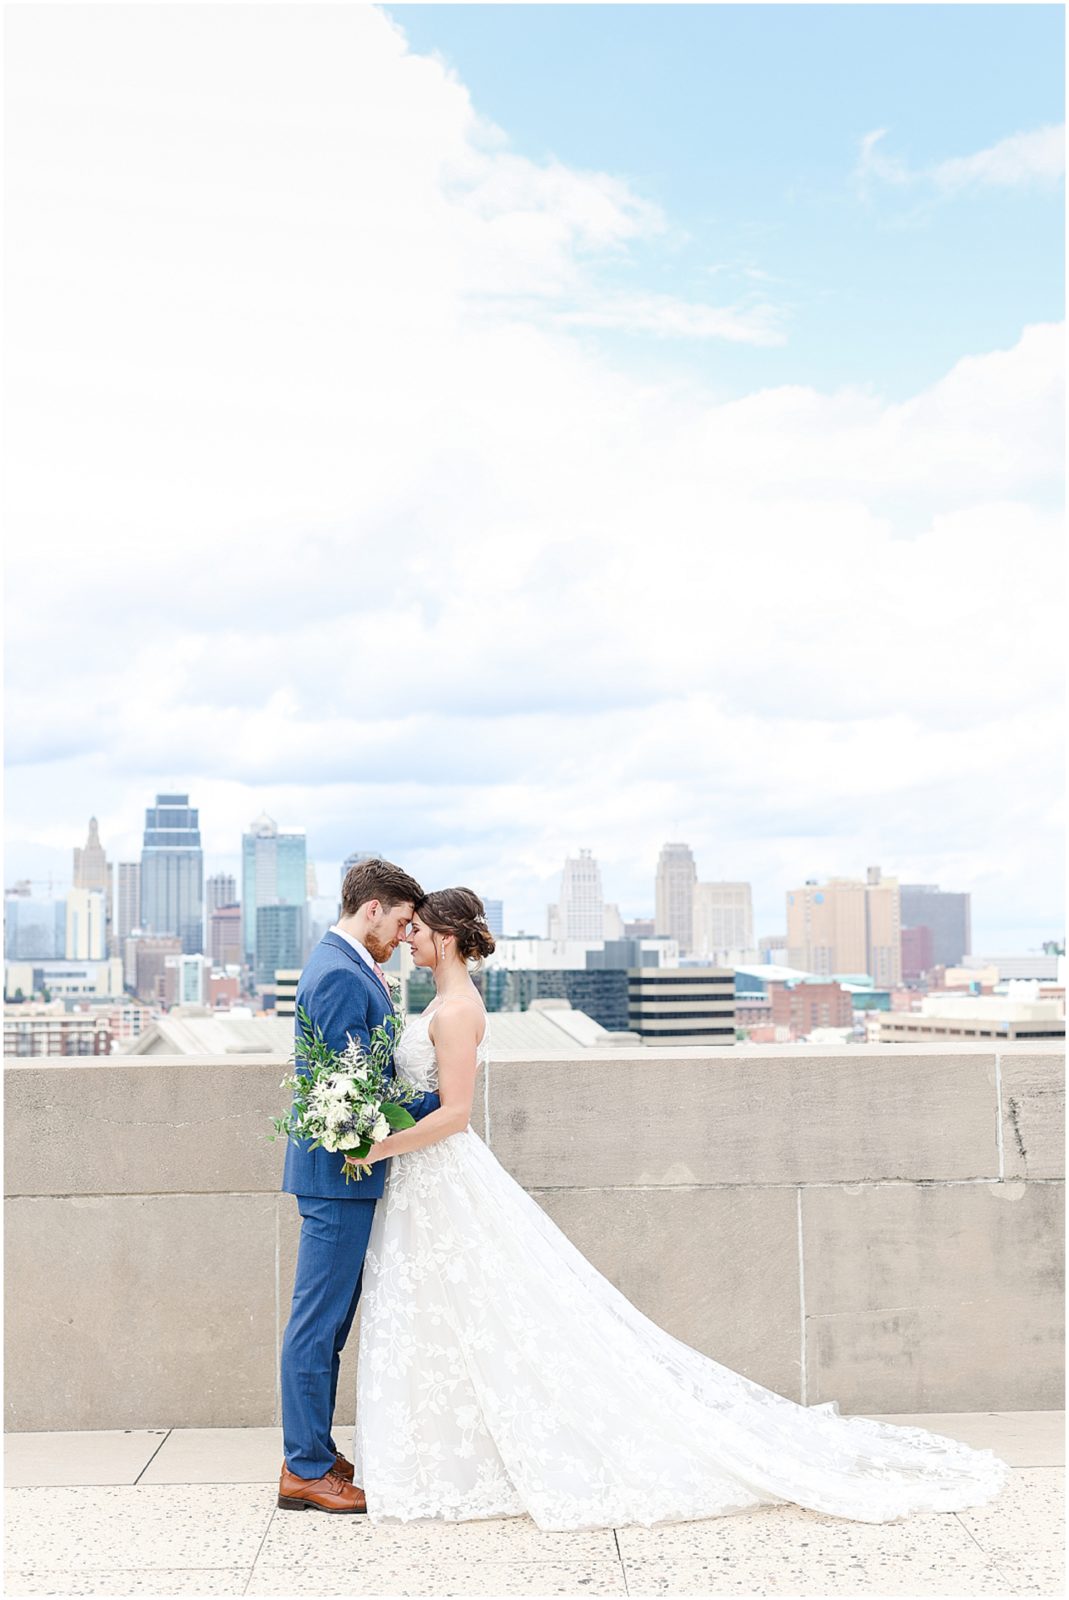 beautiful kc skyline - Kansas City and Missouri Wedding Photographer - KC Liberty Memorial Wedding Photos - Bride & Groom Portraits - Wedding Photos 